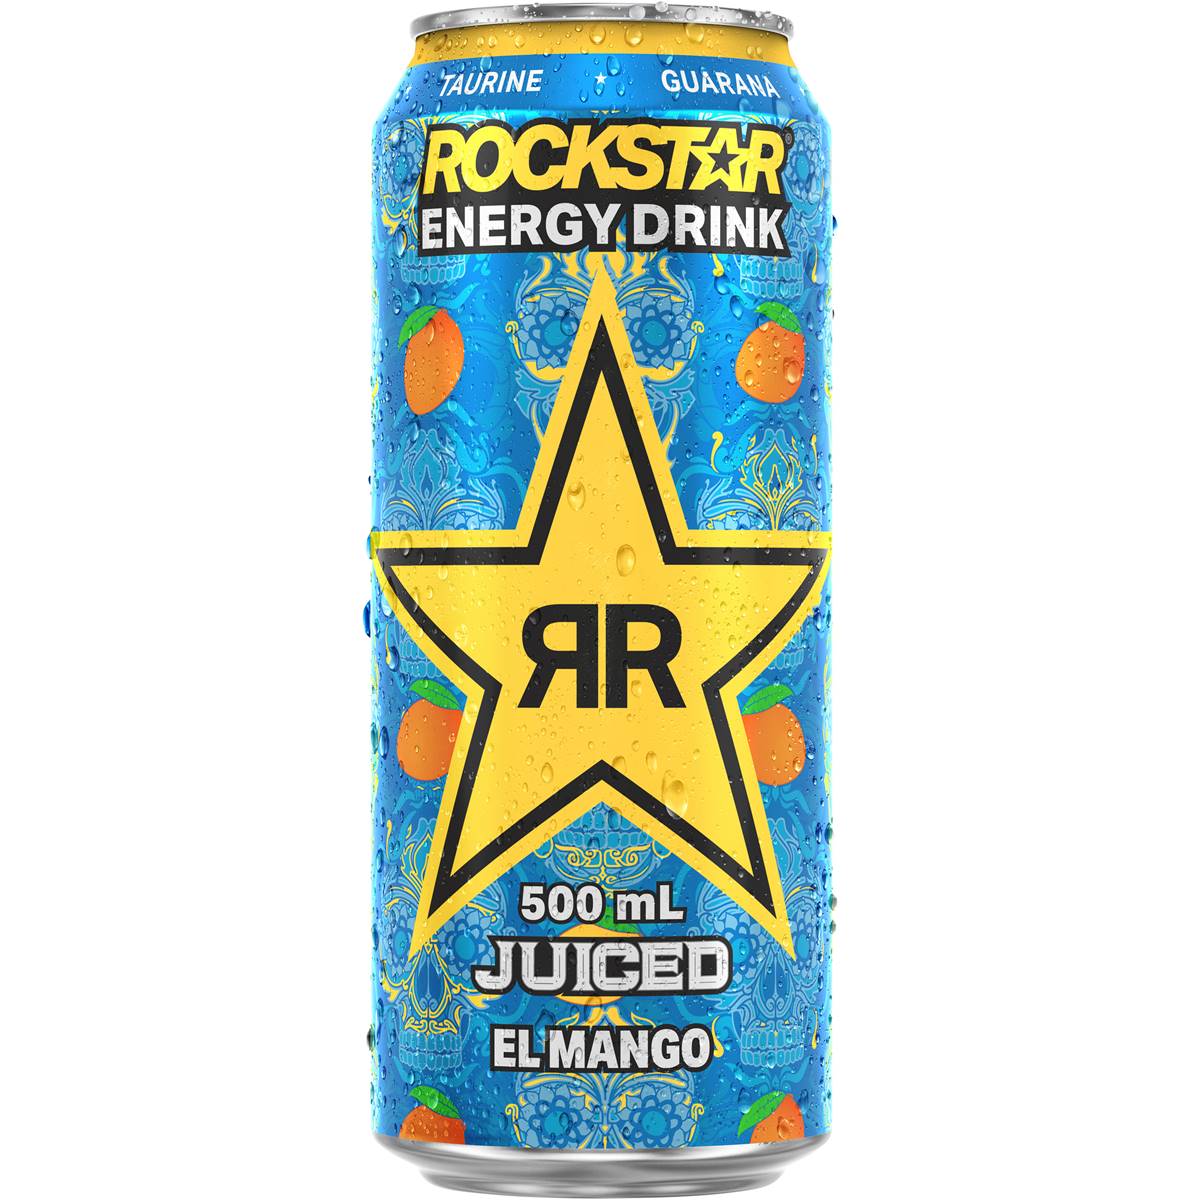 Calories in Rockstar Energy Drink Juiced El Mango